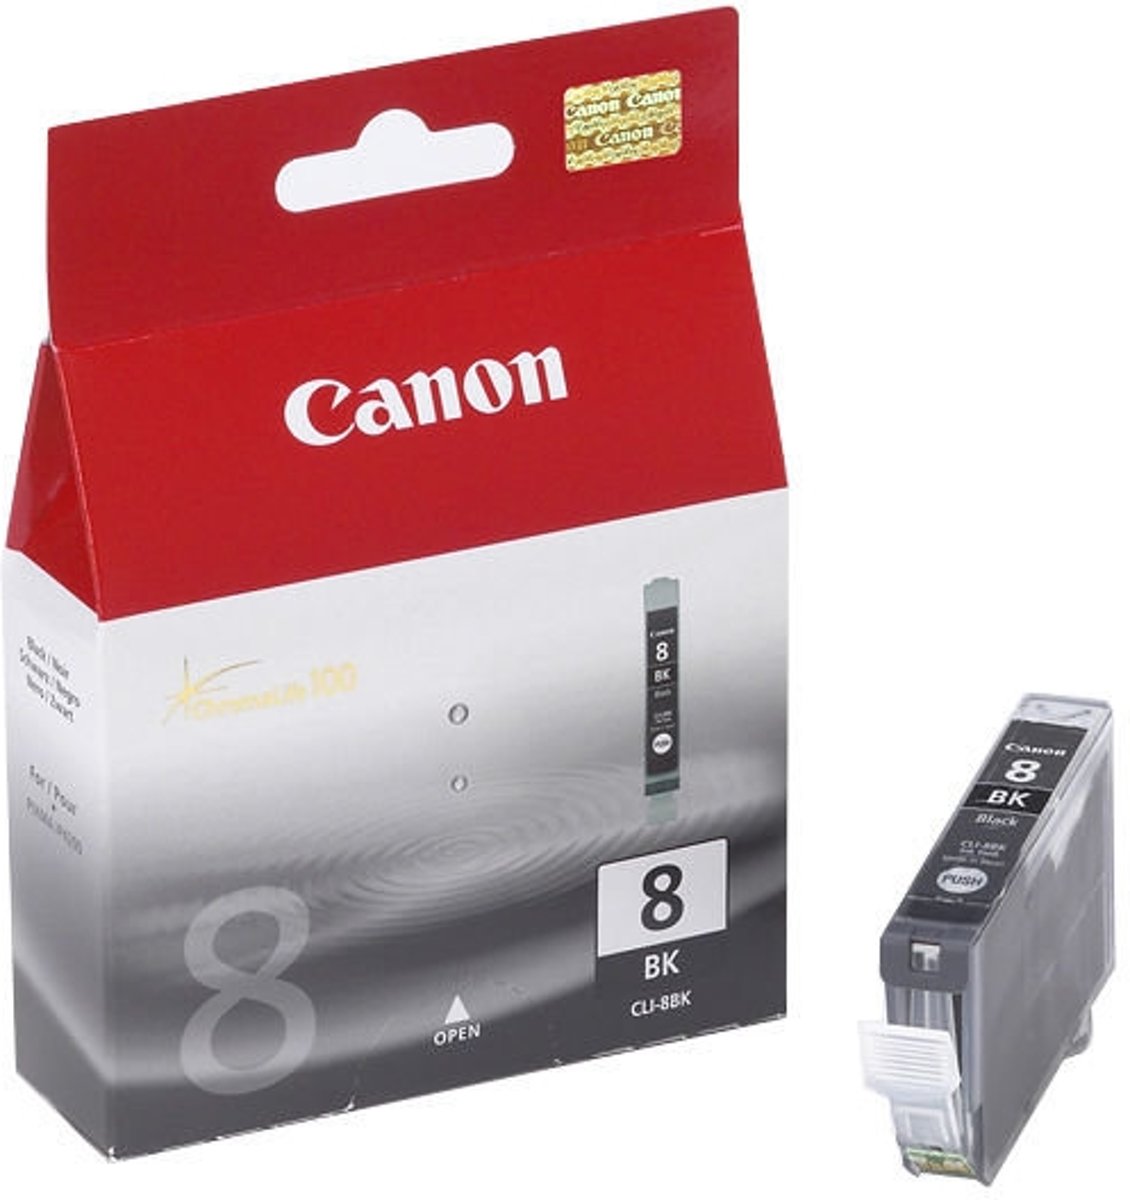 Canon  CLI-8 Inktcartridge - Zwart